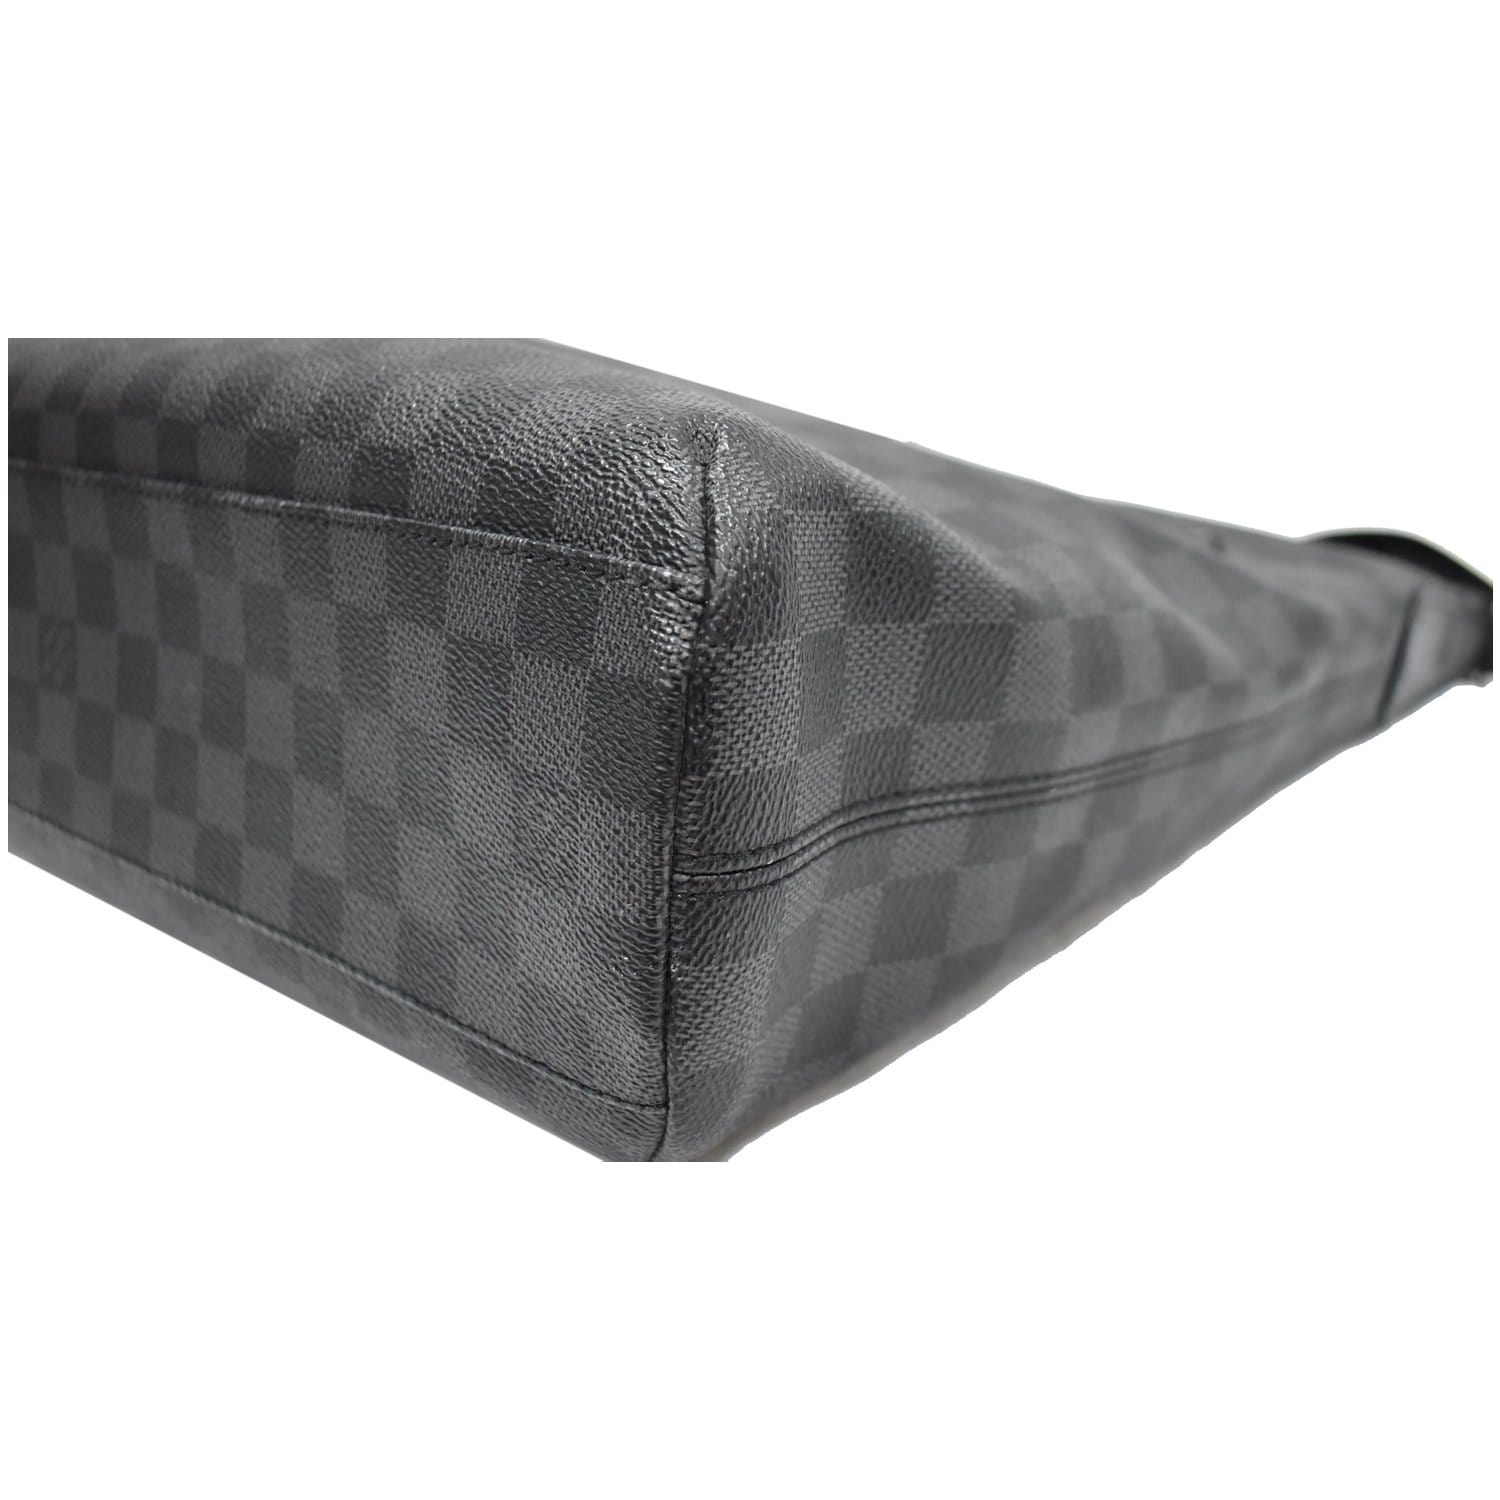 Louis Vuitton Black x Grey Damier Graphite Mick MM Messenger Crossbody Bag  34lv3